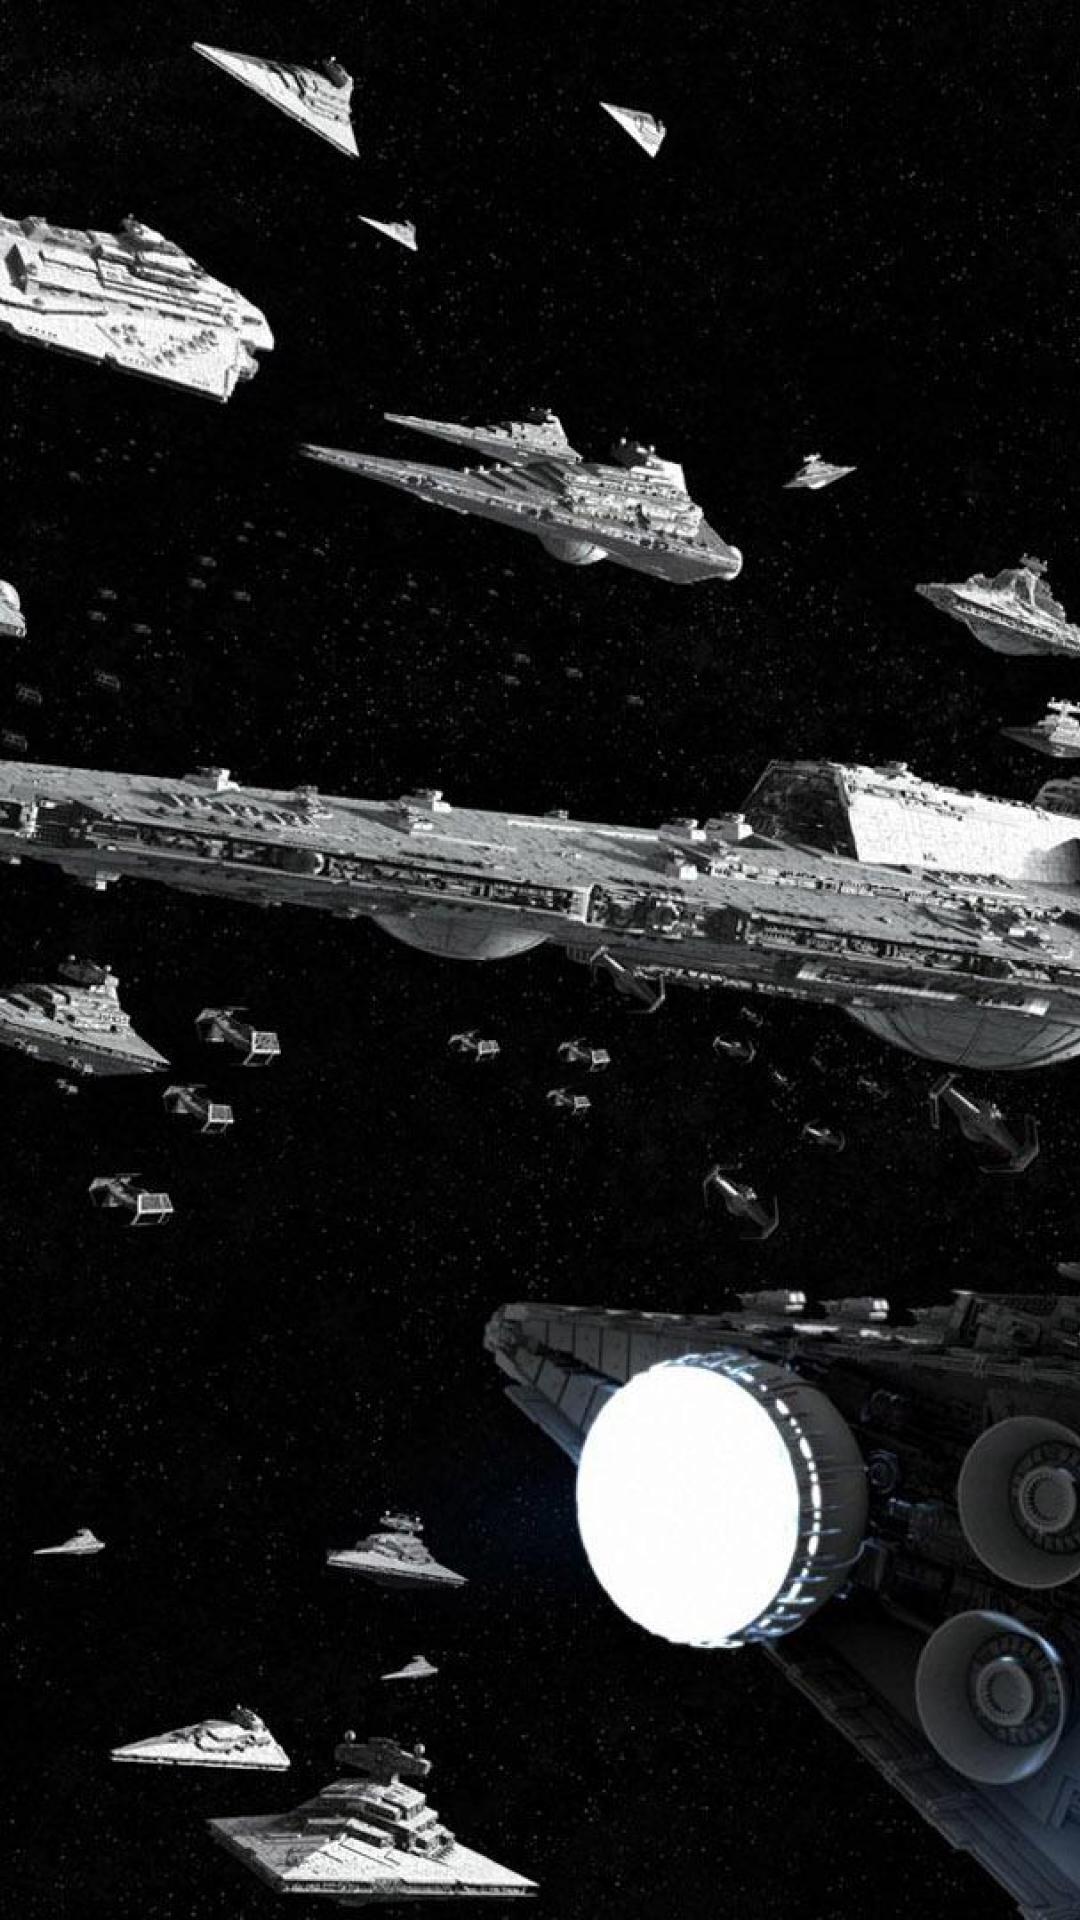 Fleet Star Imperial Wars Movies